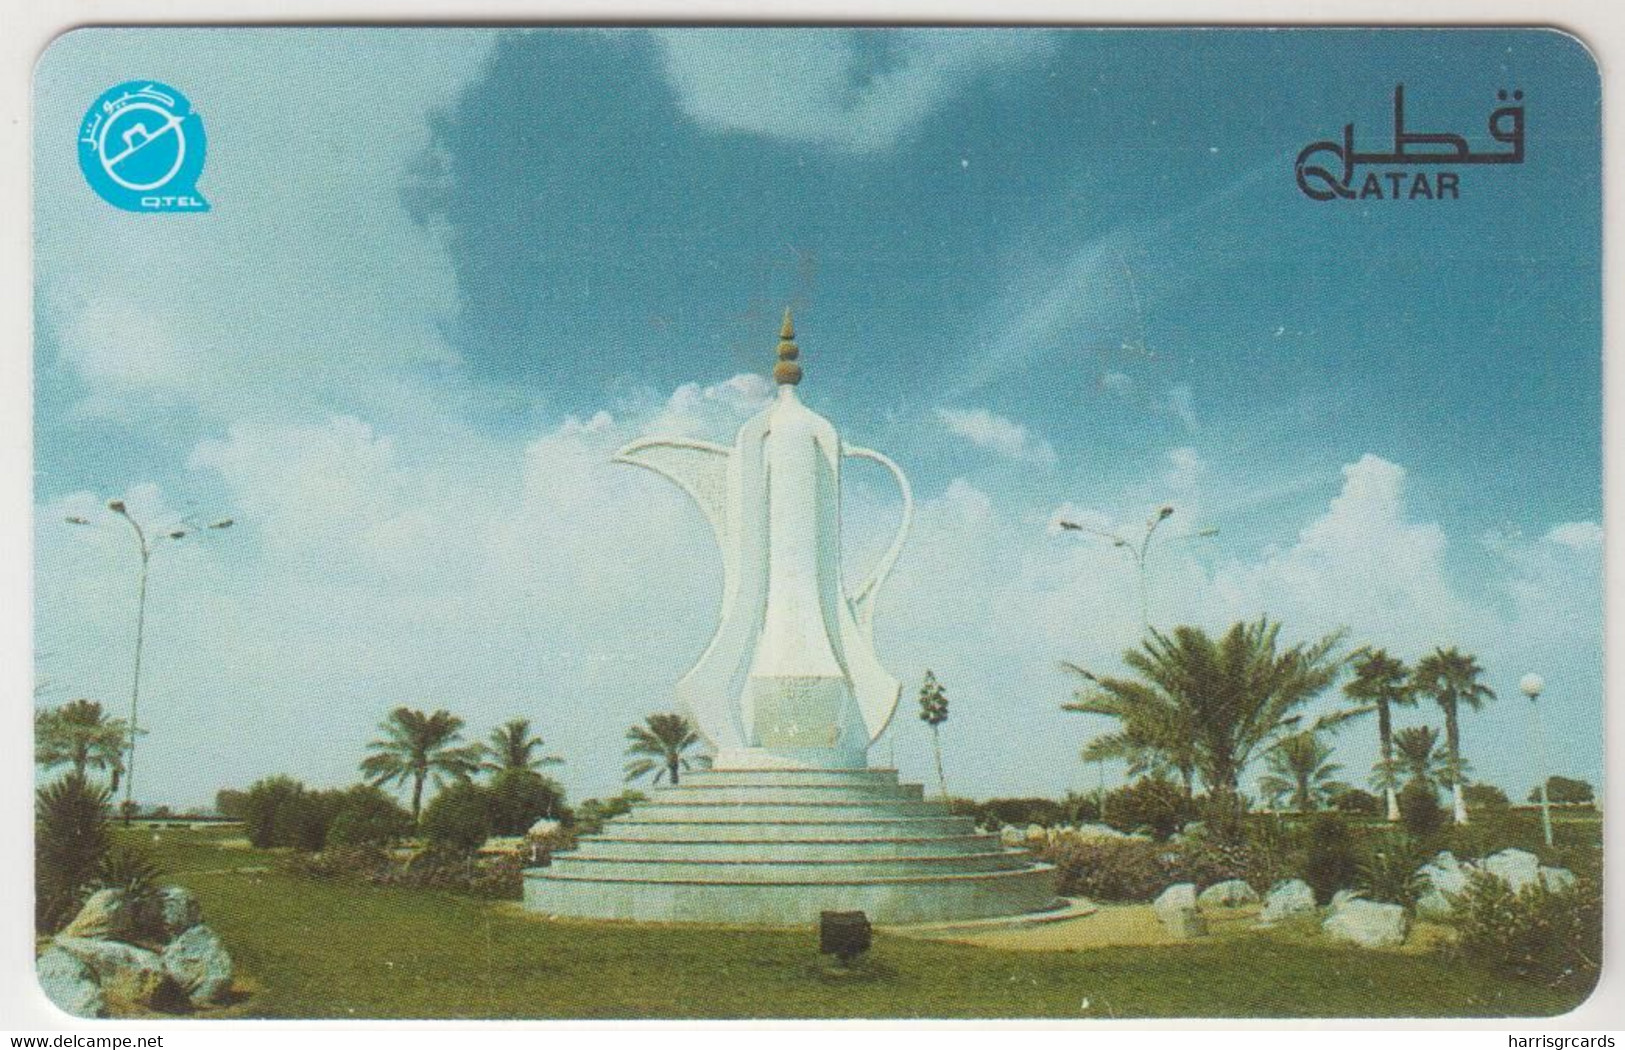 QATAR - Dall Monument, 50QR, Q-Tel, 01/96, Used - Qatar